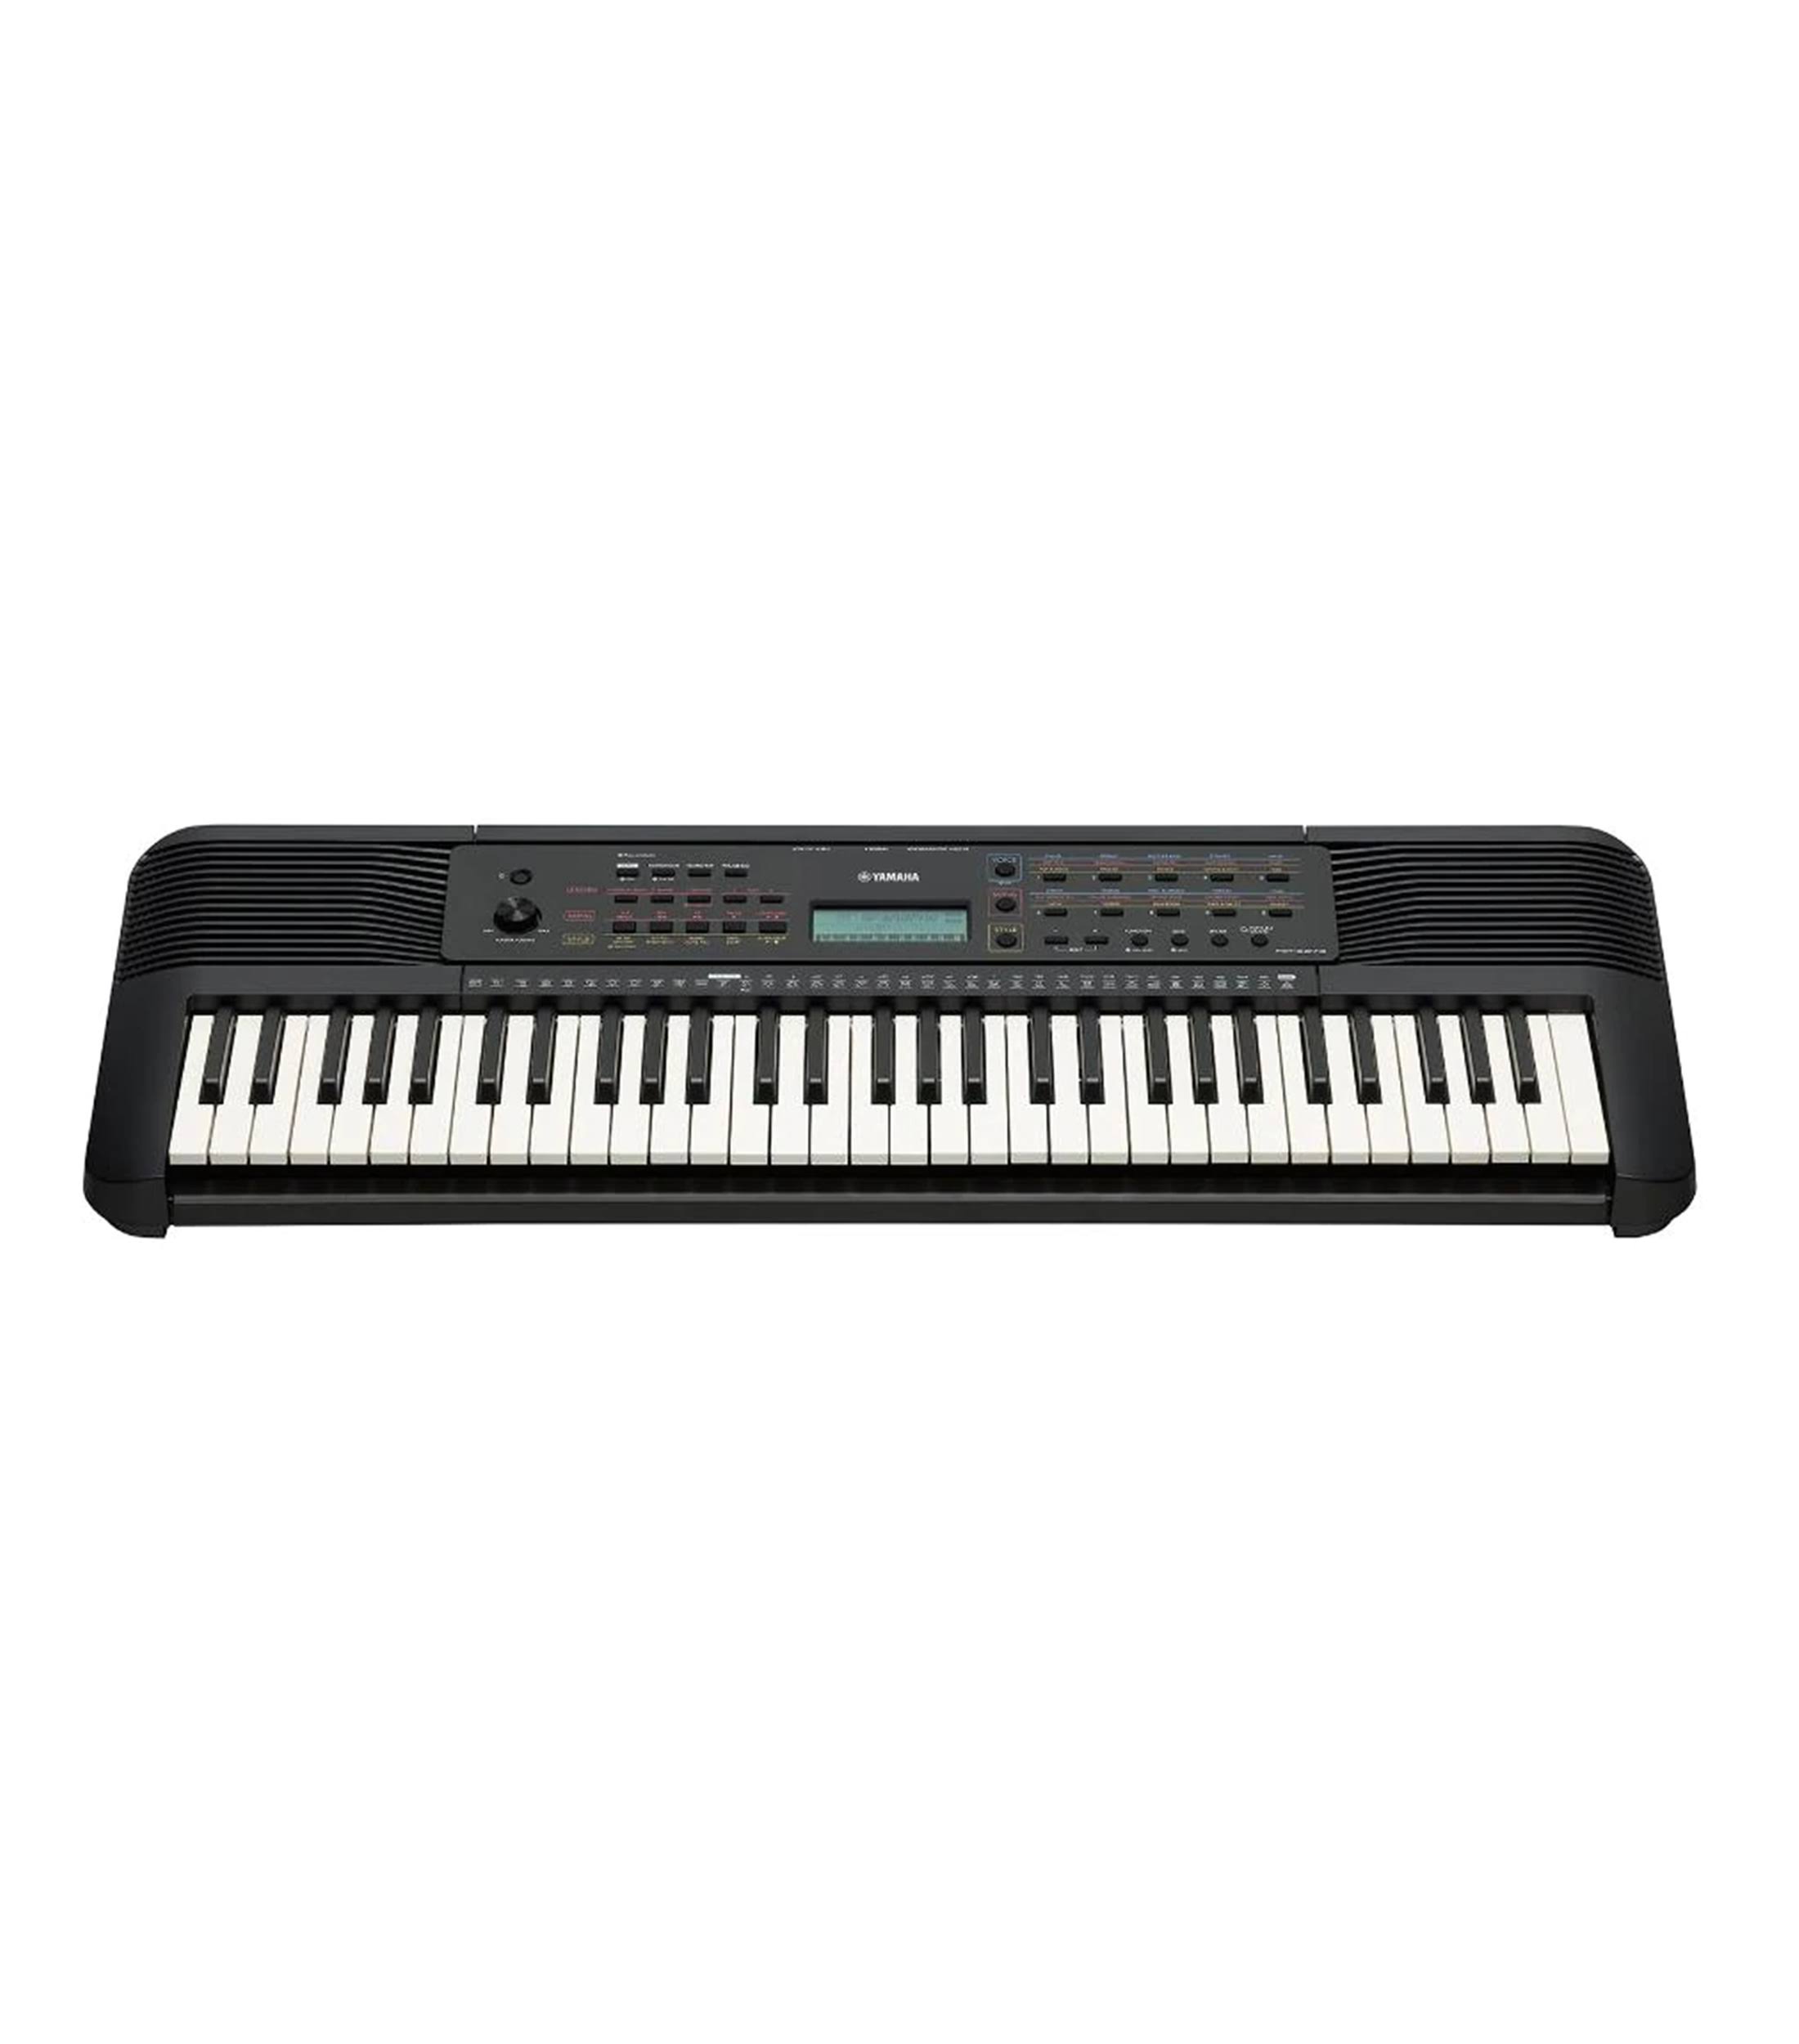 Yamaha PSR-E273 61-Key Arranger Keyboard